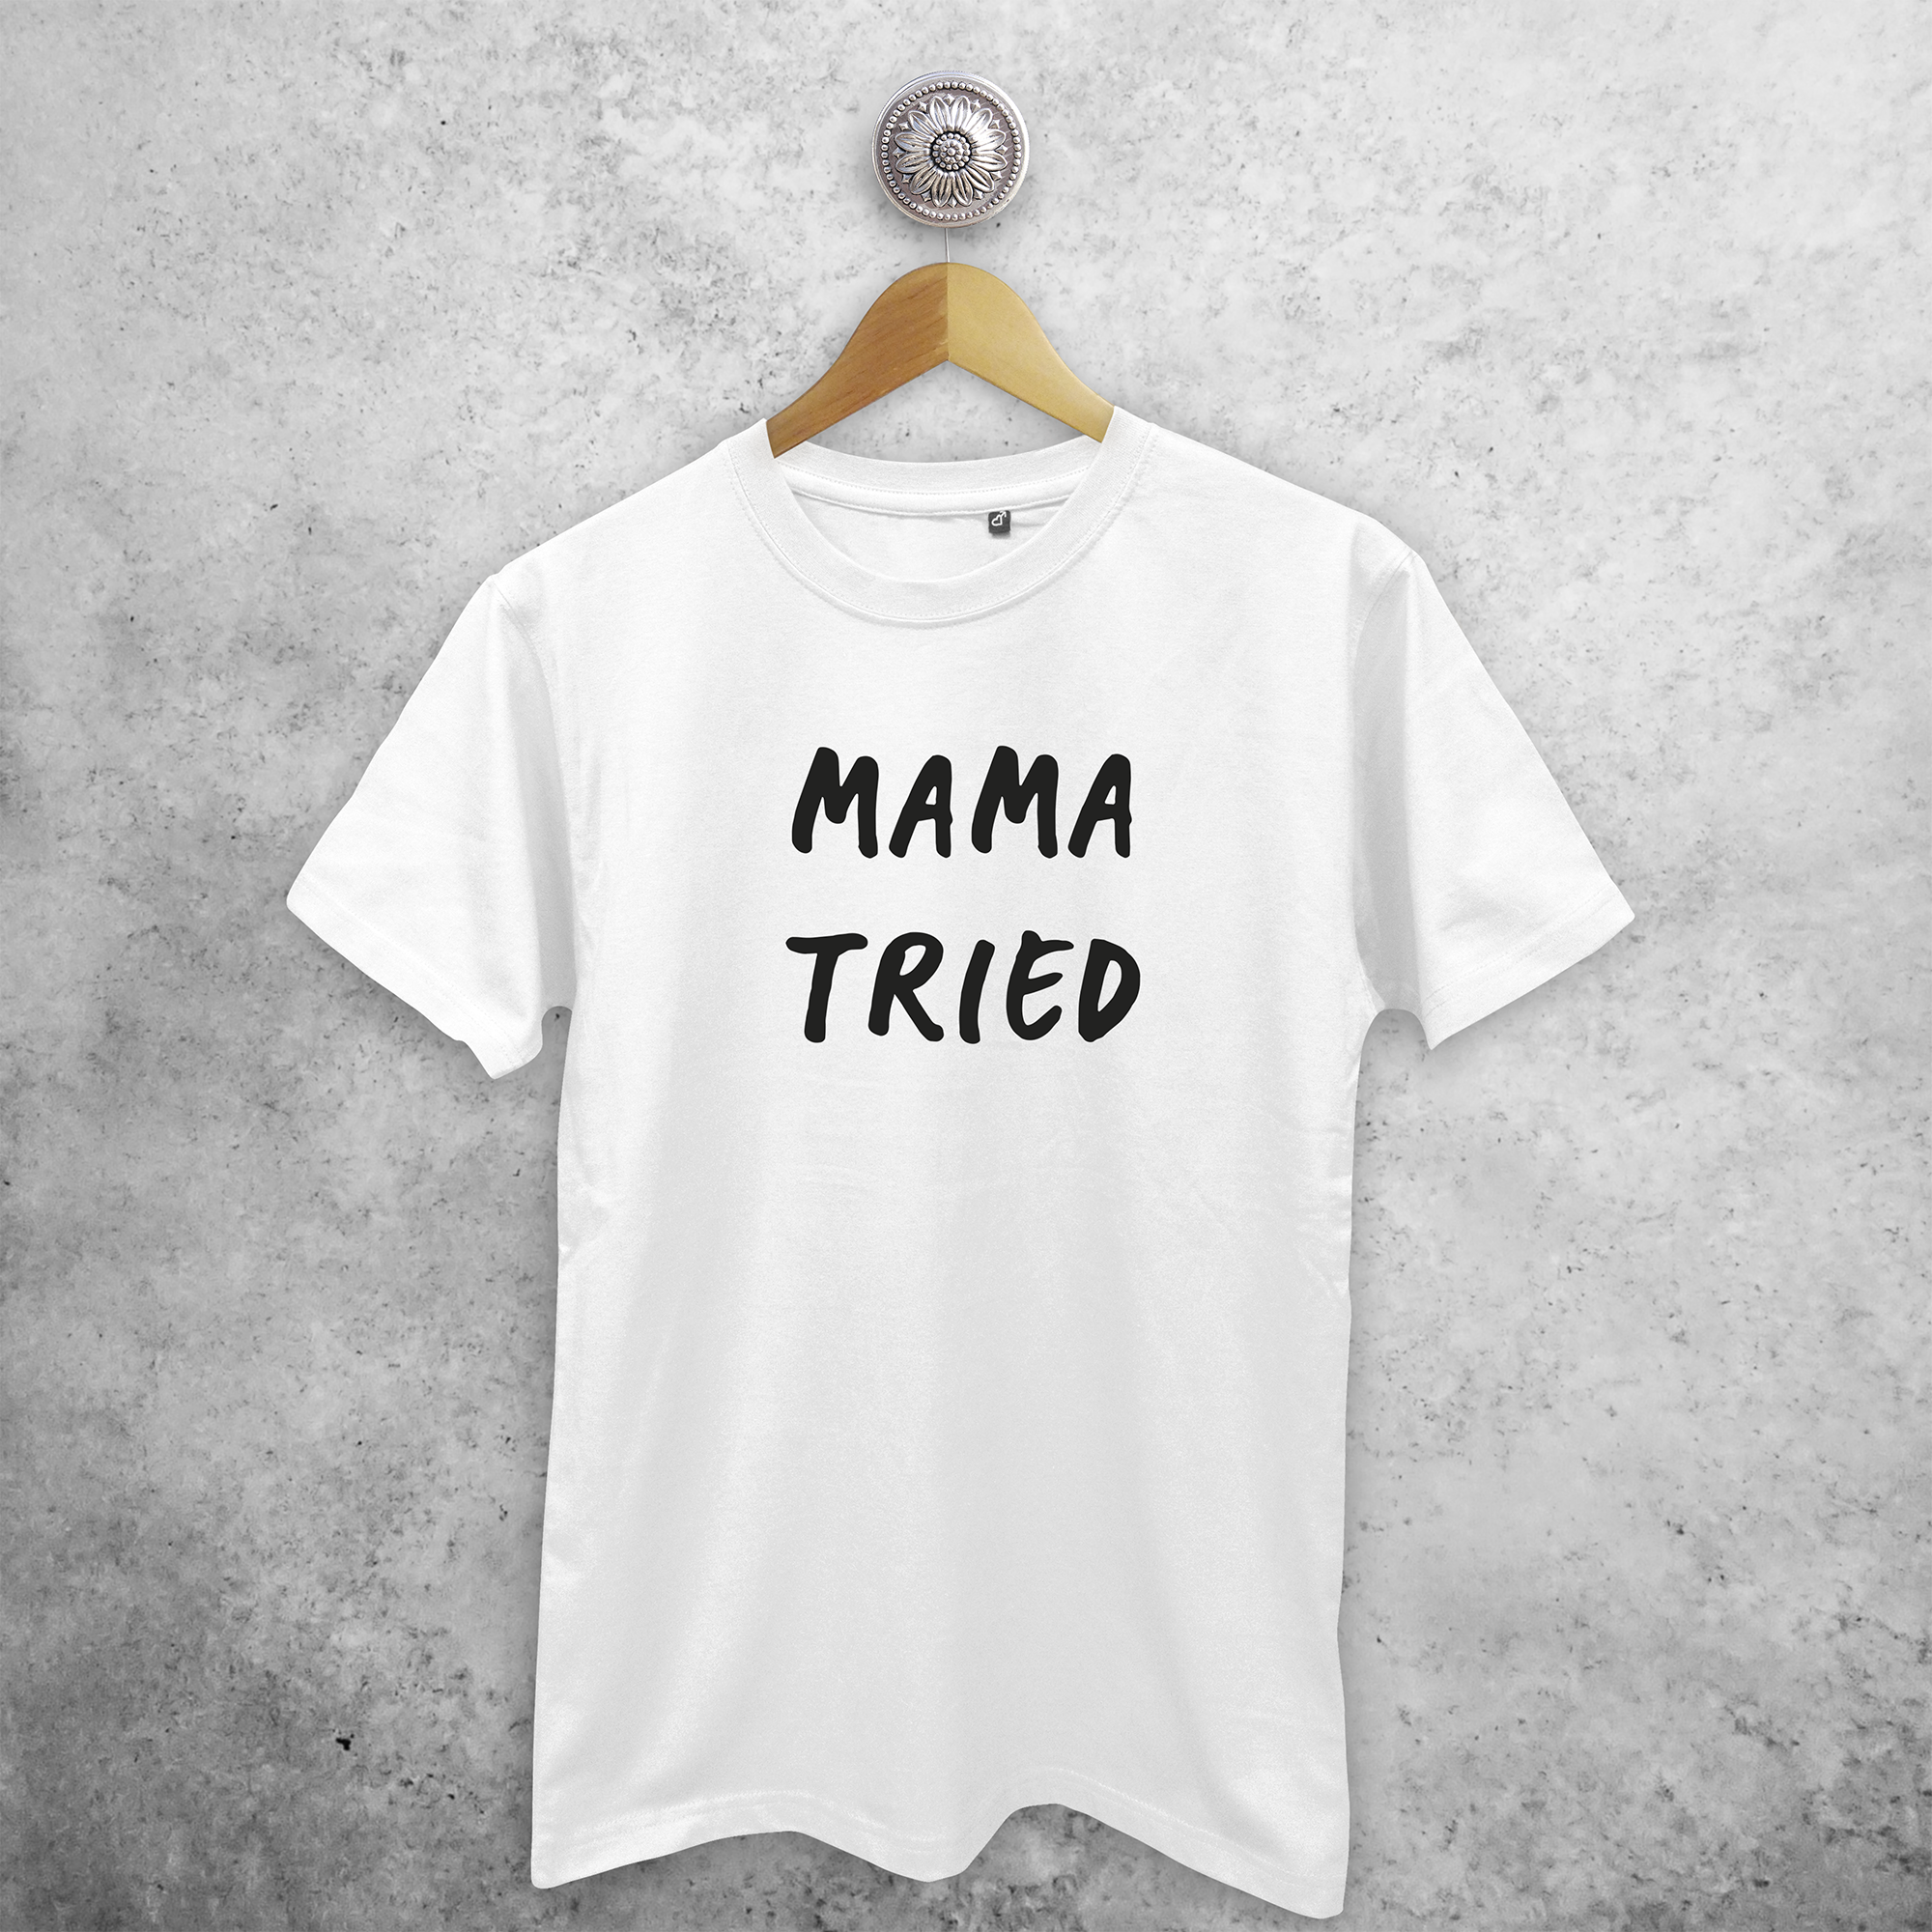 'Mama tried' adult shirt